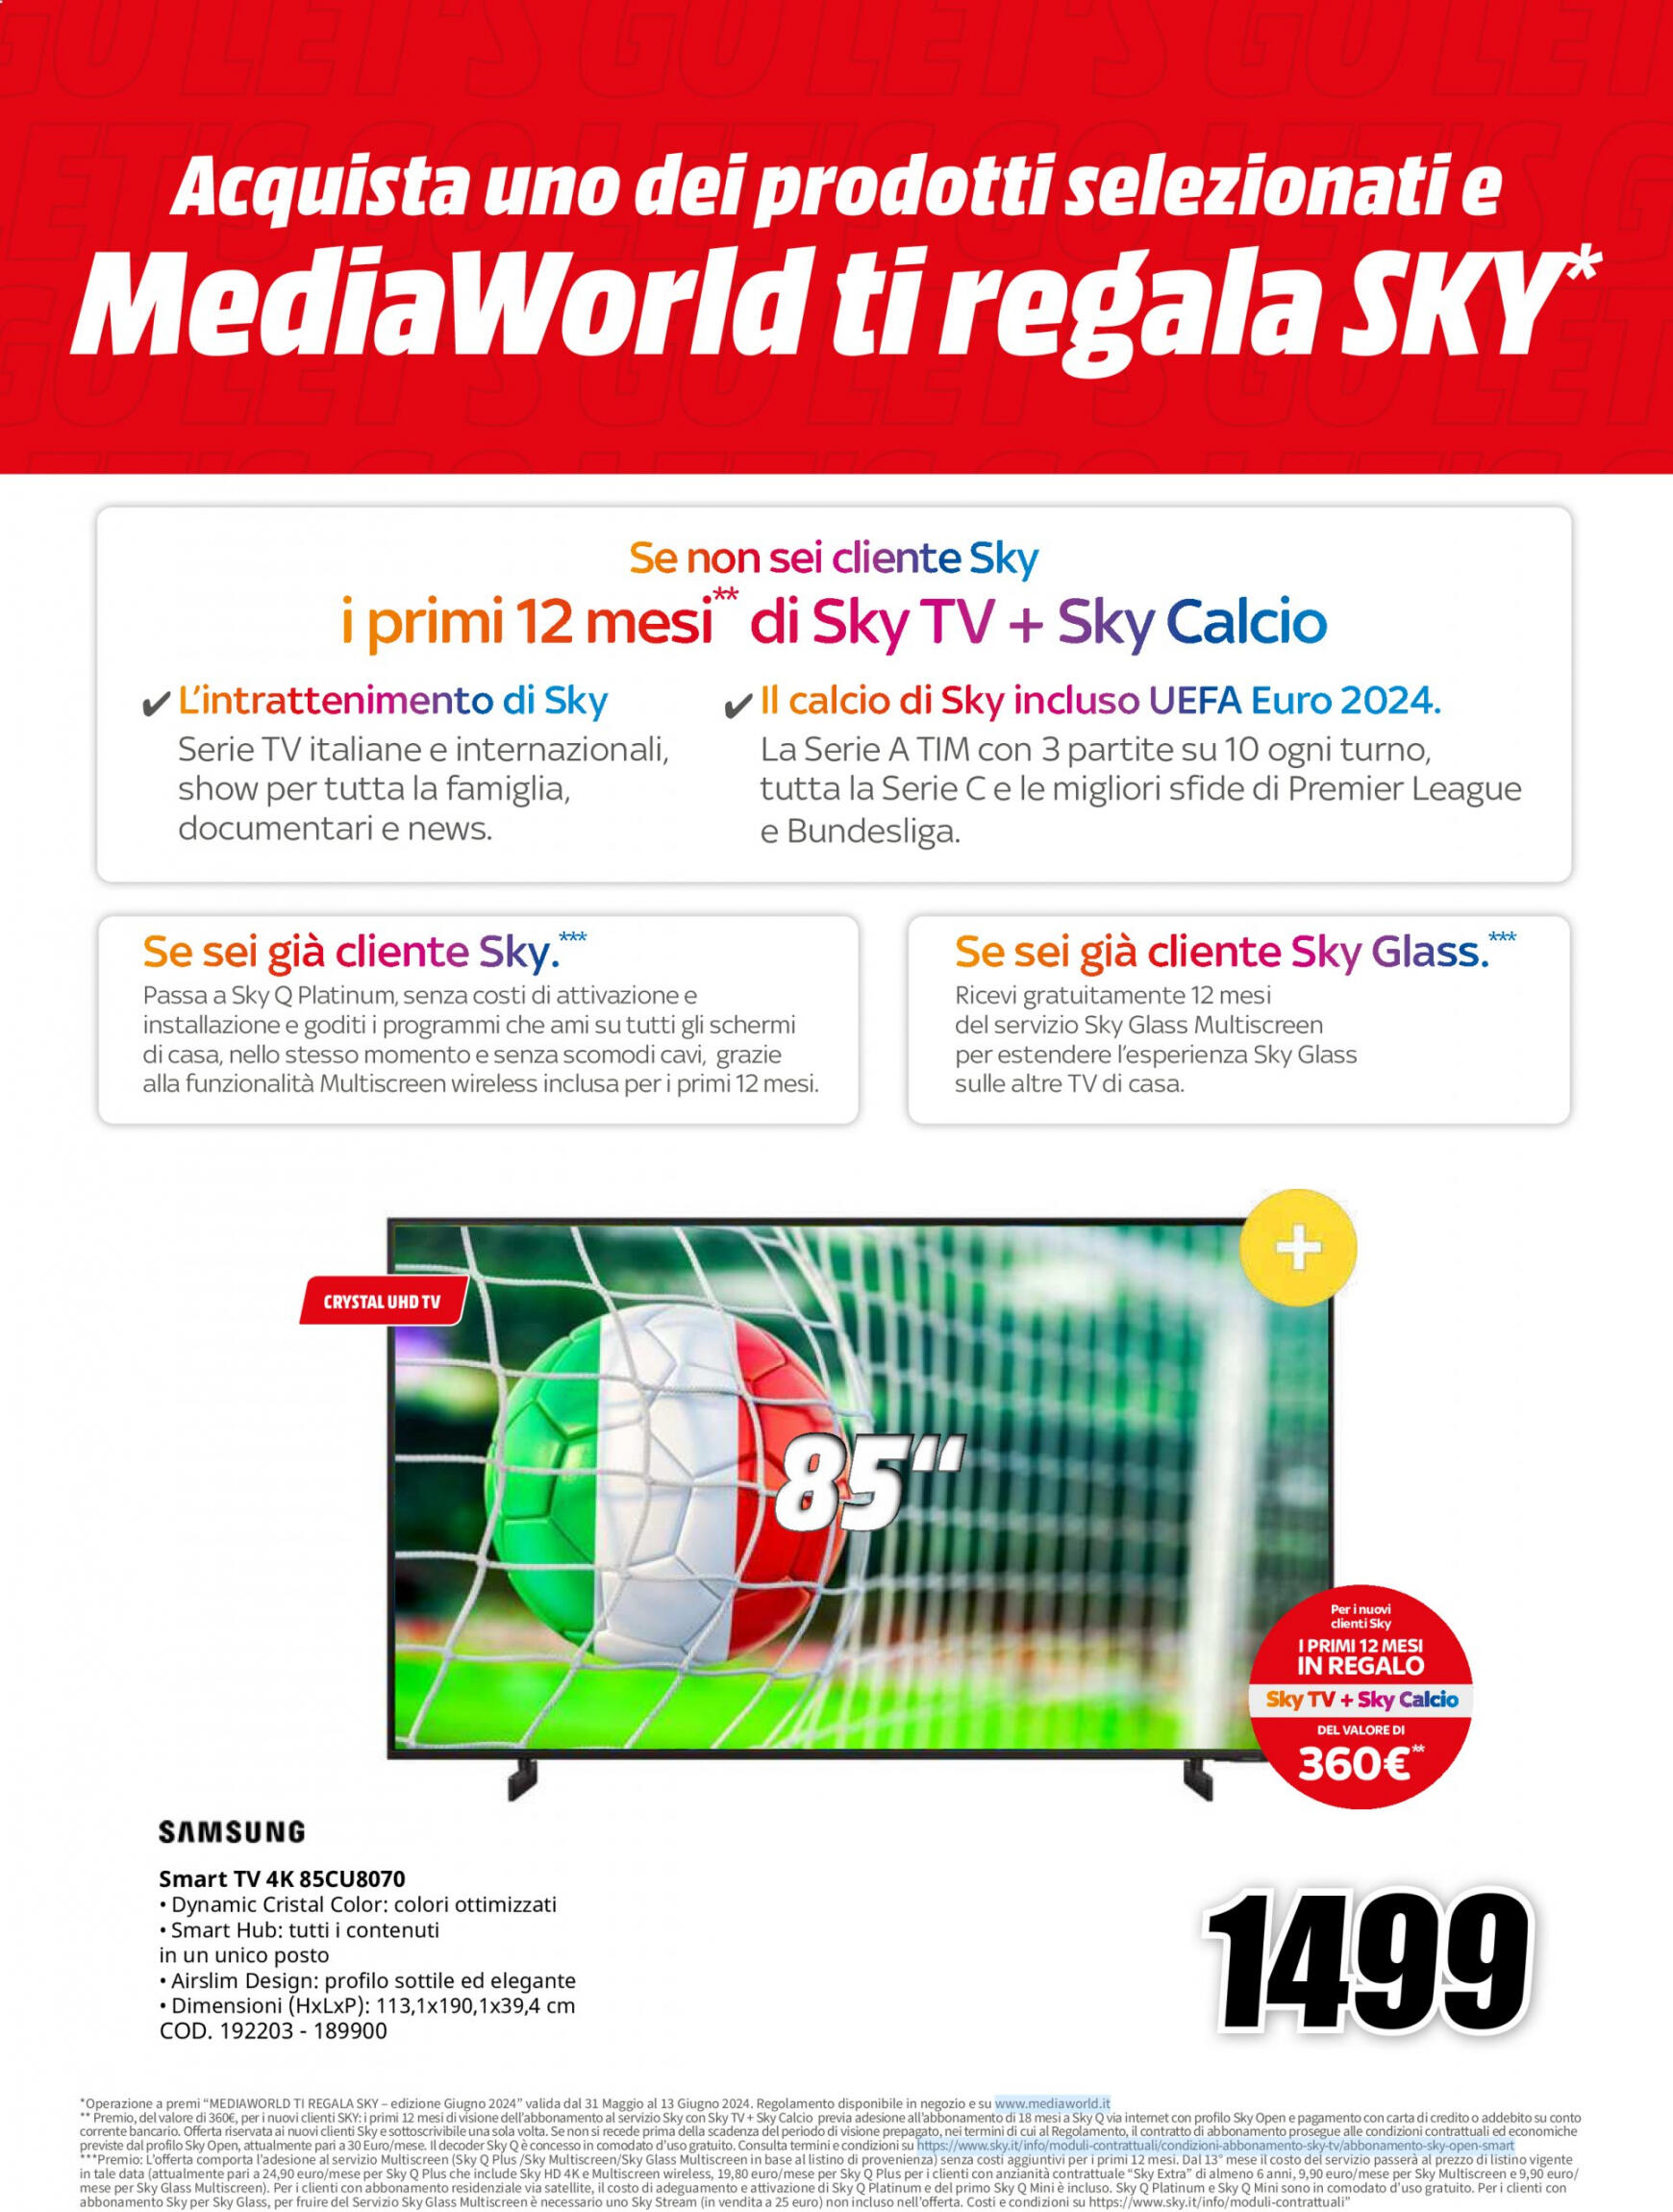 mediaworld - Nuovo volantino Mediaworld 31.05. - 13.06. - page: 2